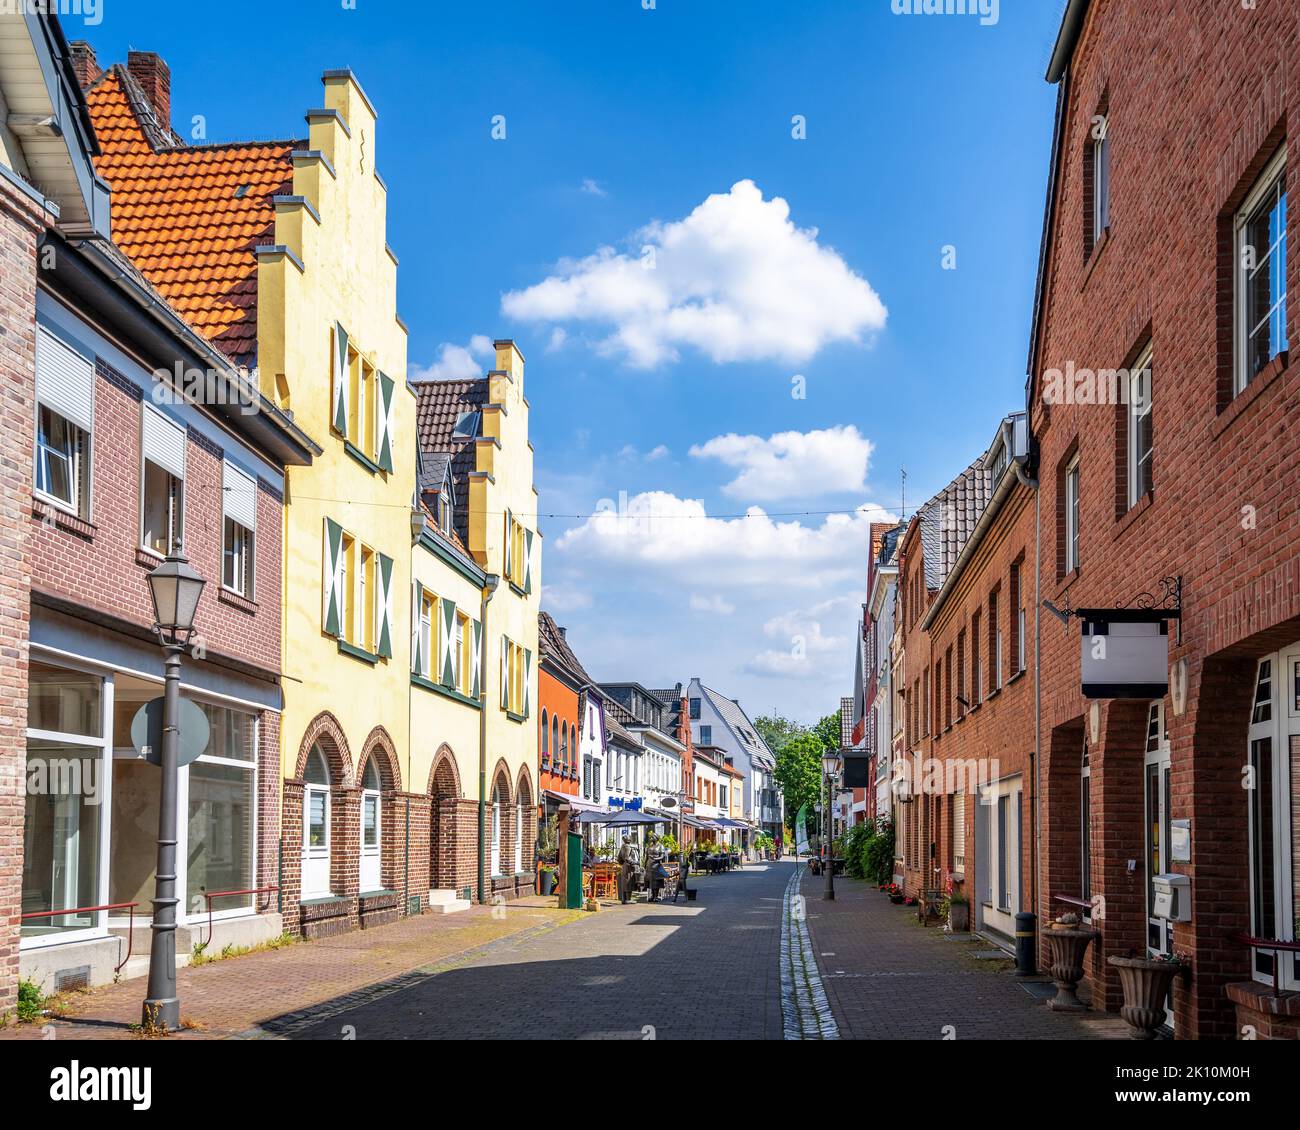 Historical city in Xanten, Germany Stock Photo